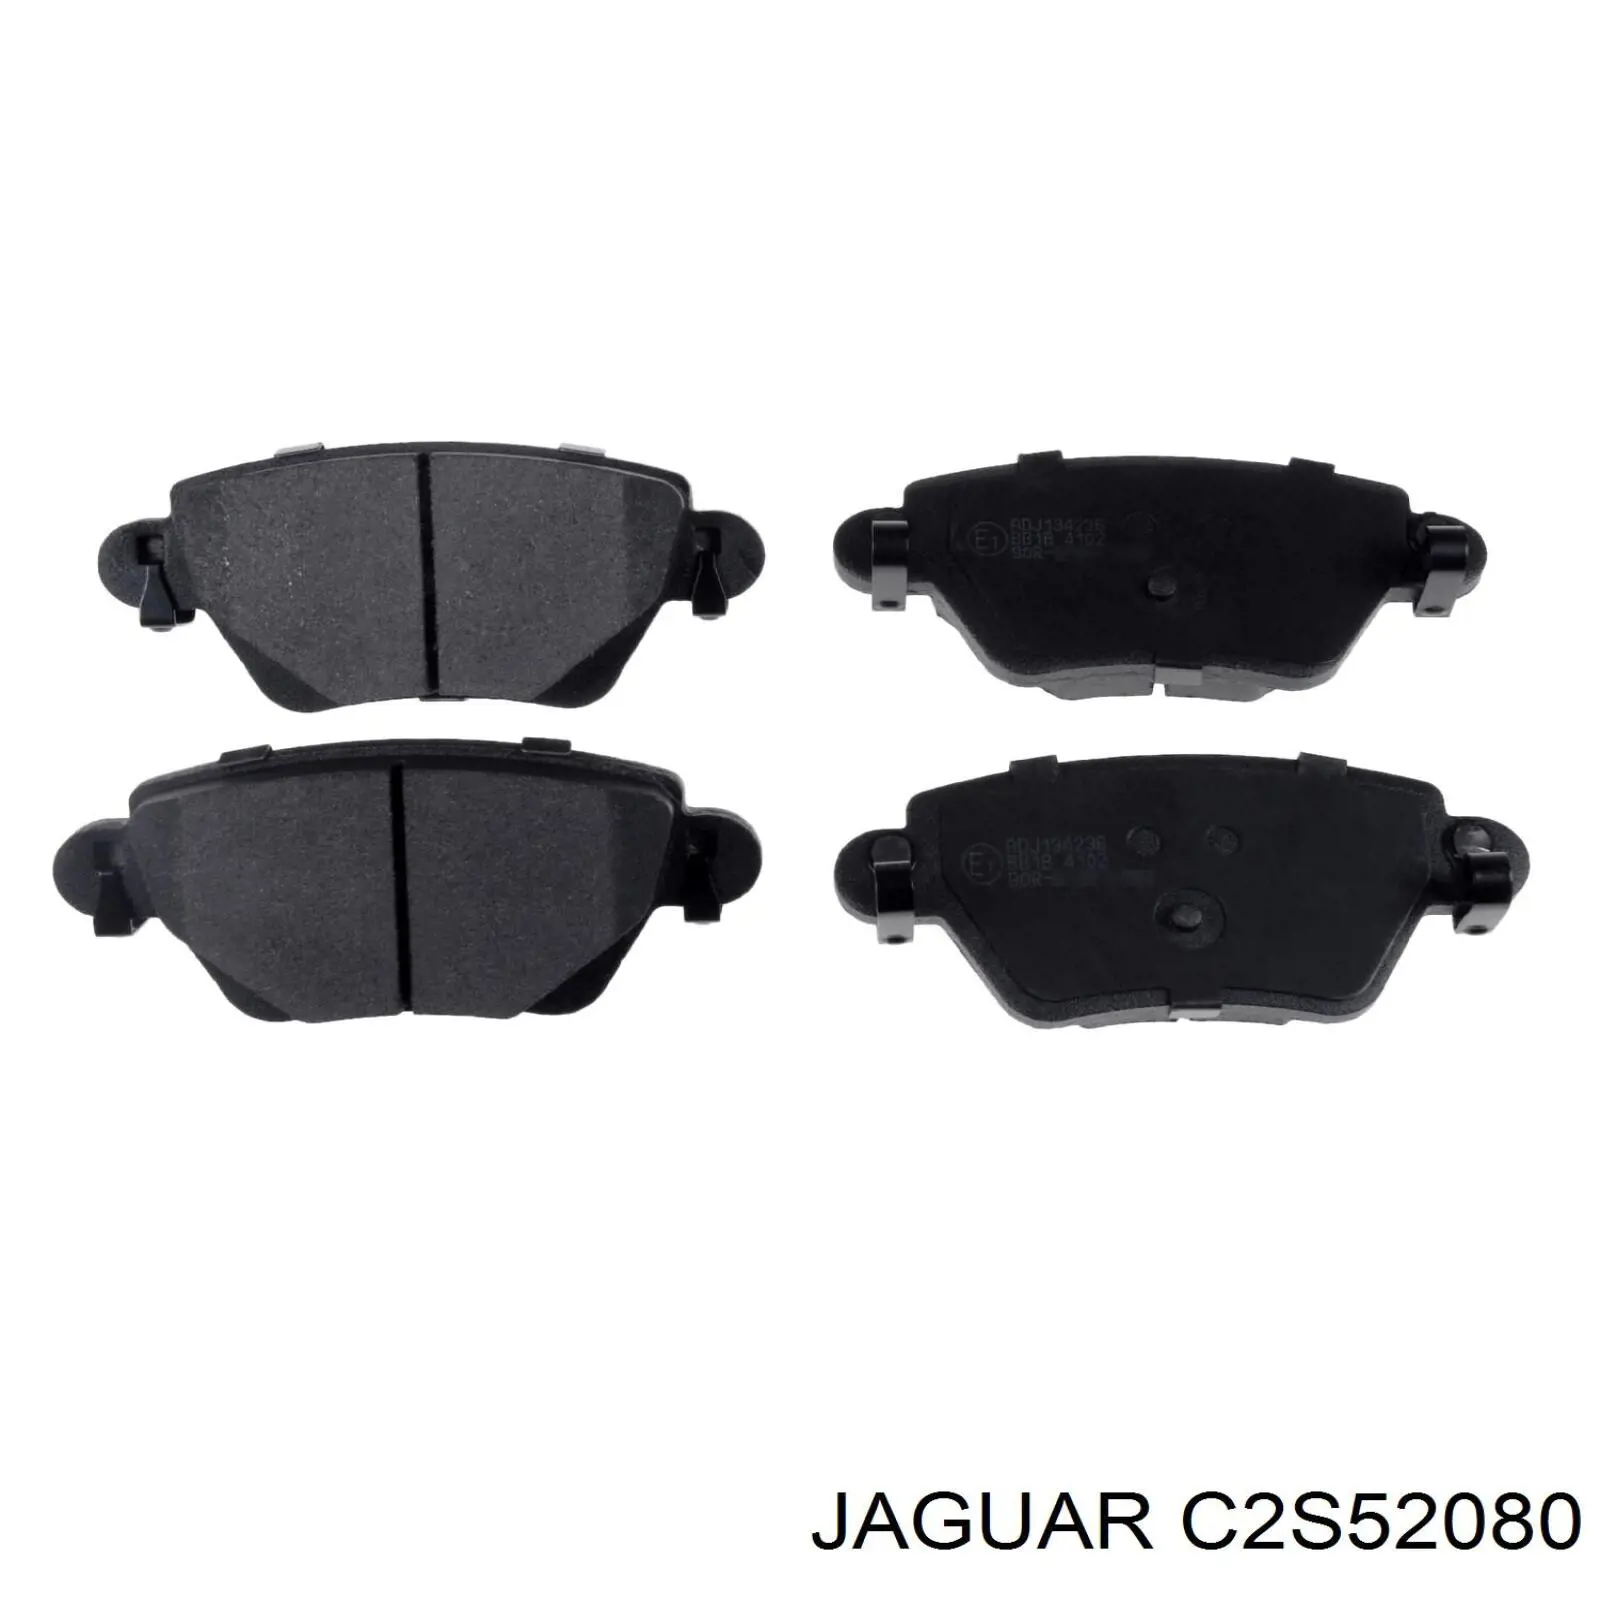 C2S52080 Jaguar sapatas do freio traseiras de disco